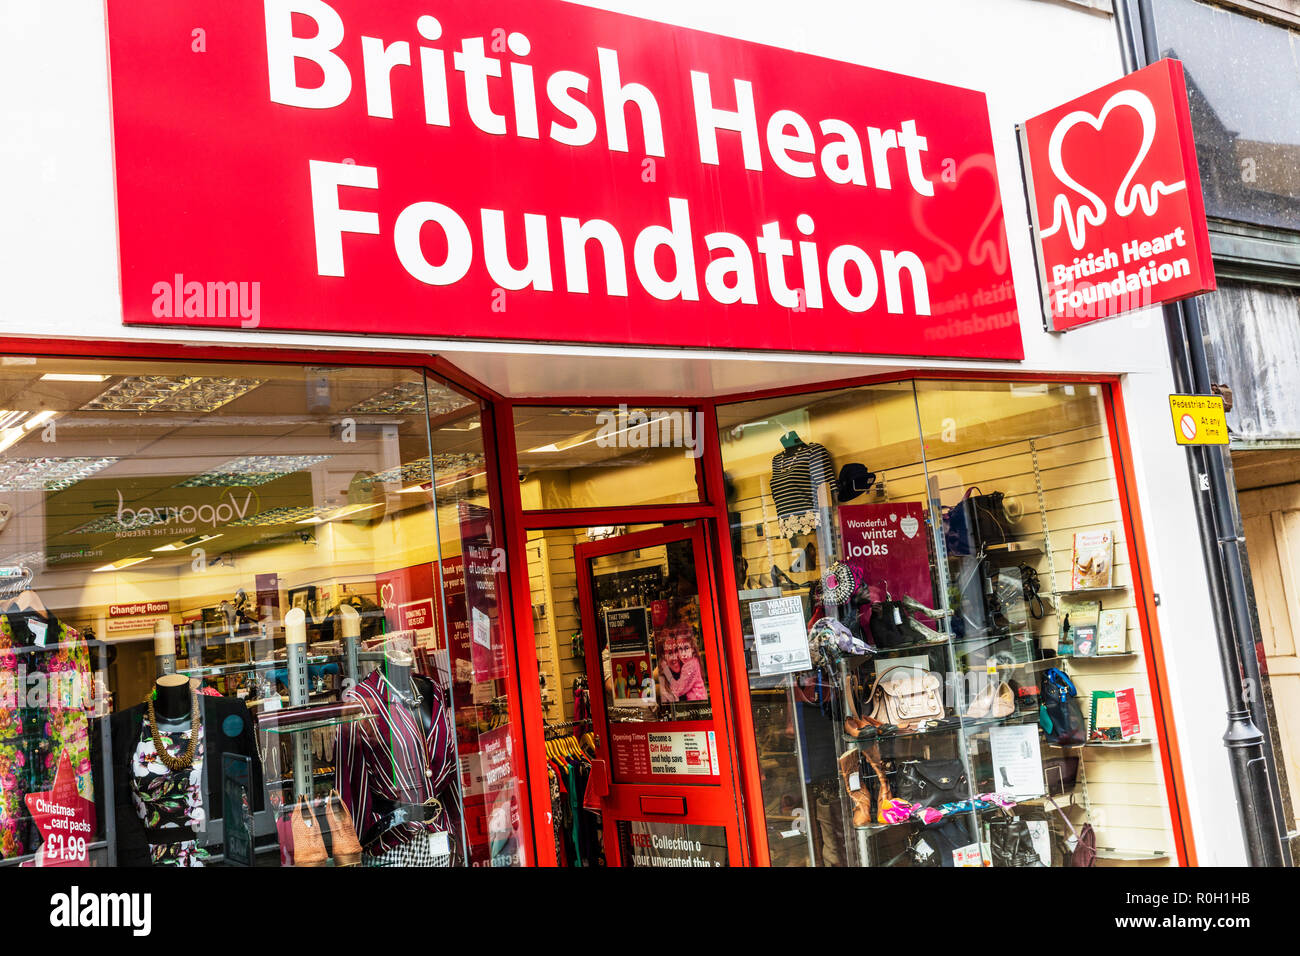 British Heart Foundation charity shop, British Heart Foundation, charity shops, British Heart Foundation logo, British Heart Foundation sign, charities Stock Photo